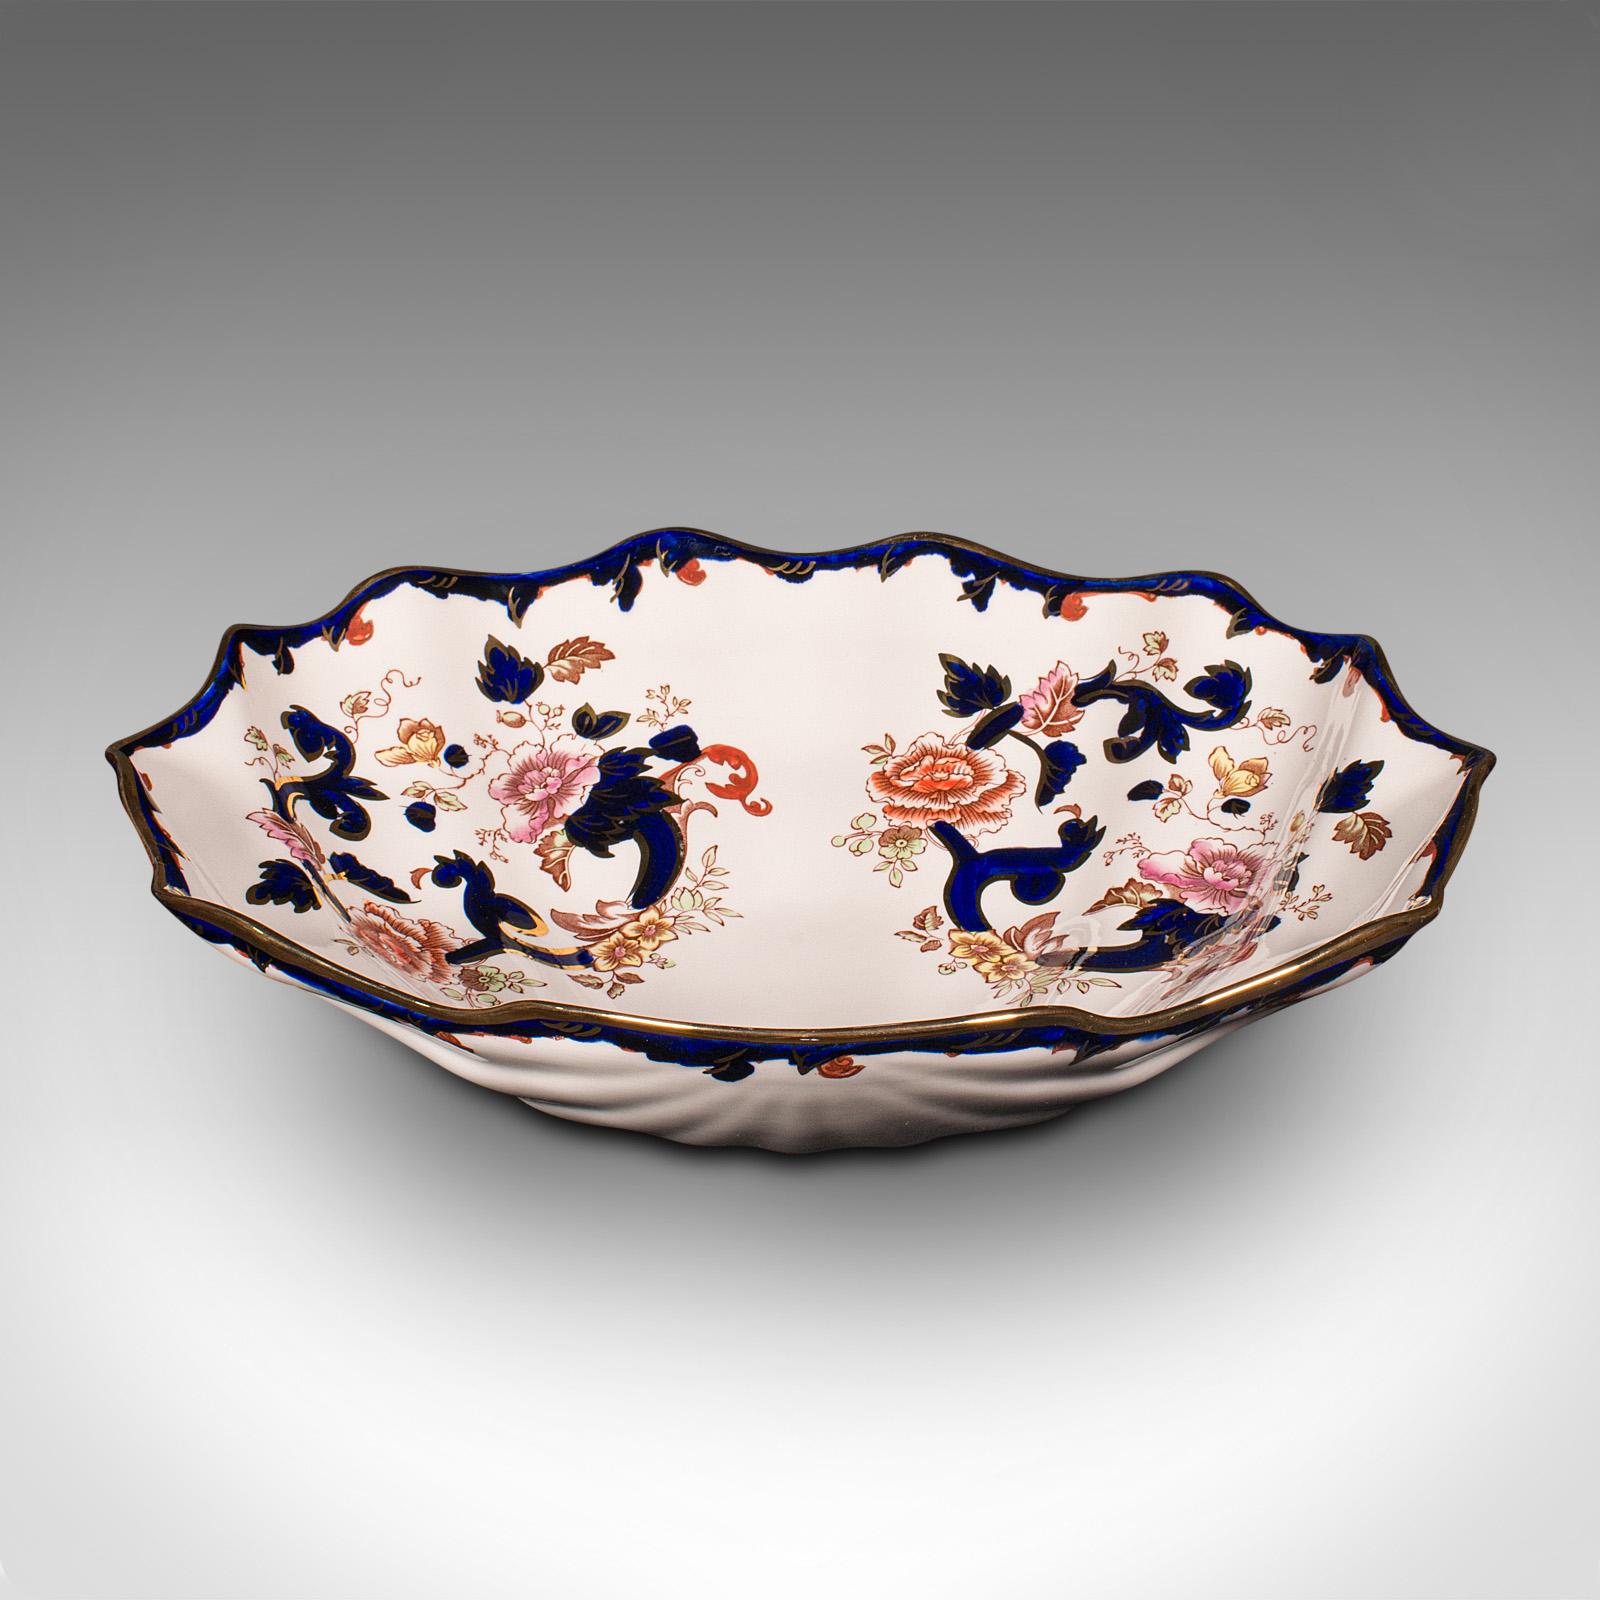 20th Century Large Vintage Shell Shaped Fruit Bowl, English Ceramic, Decorative, Serving Dish For Sale